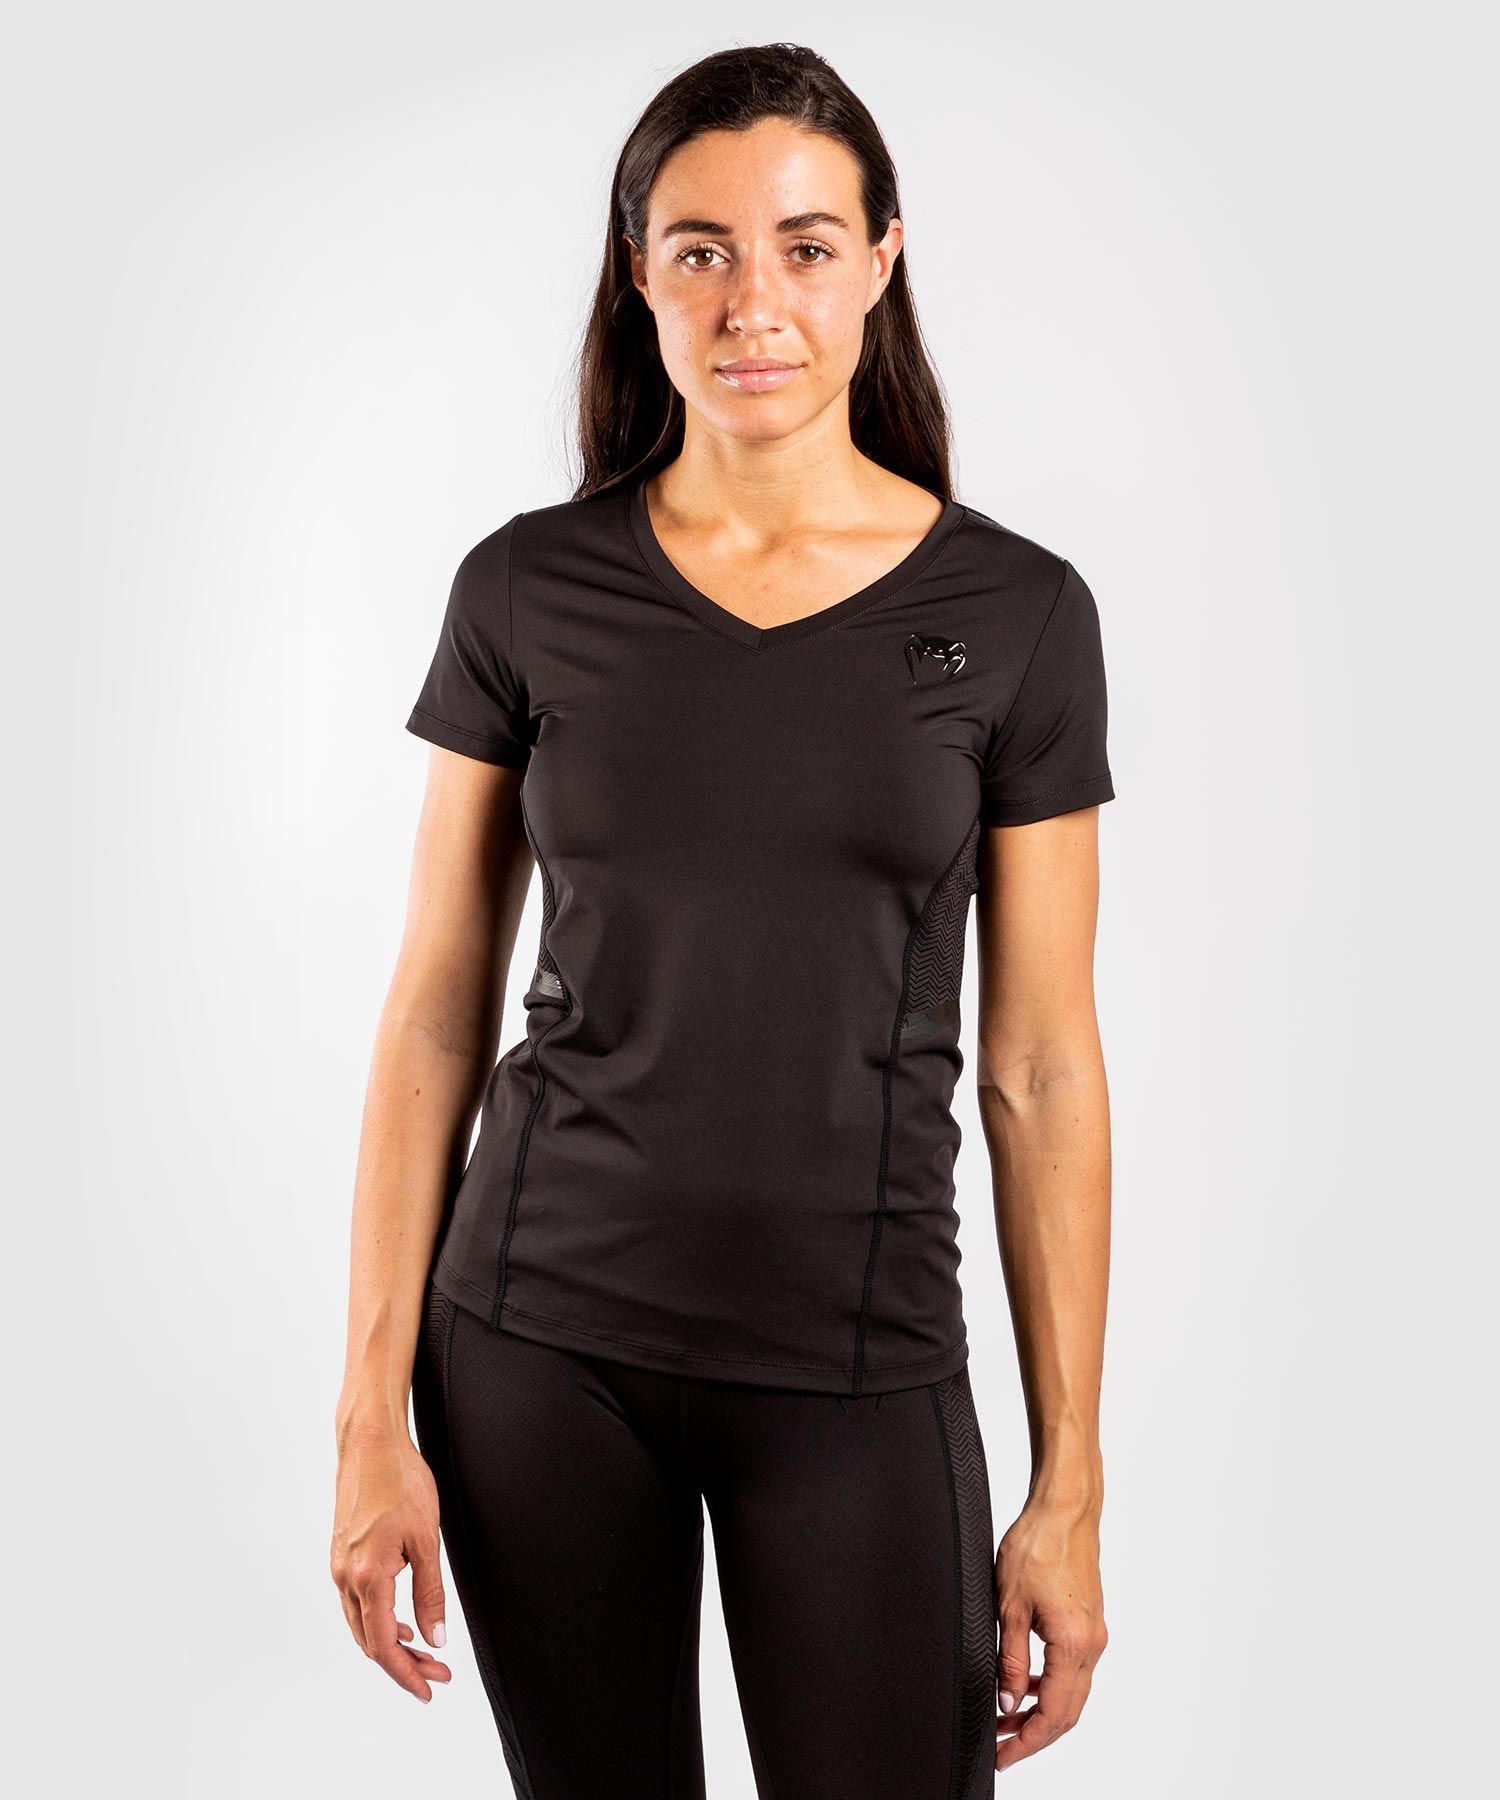 Venum G-Fit Dry-Tech T-shirt - For Women - Black/Black